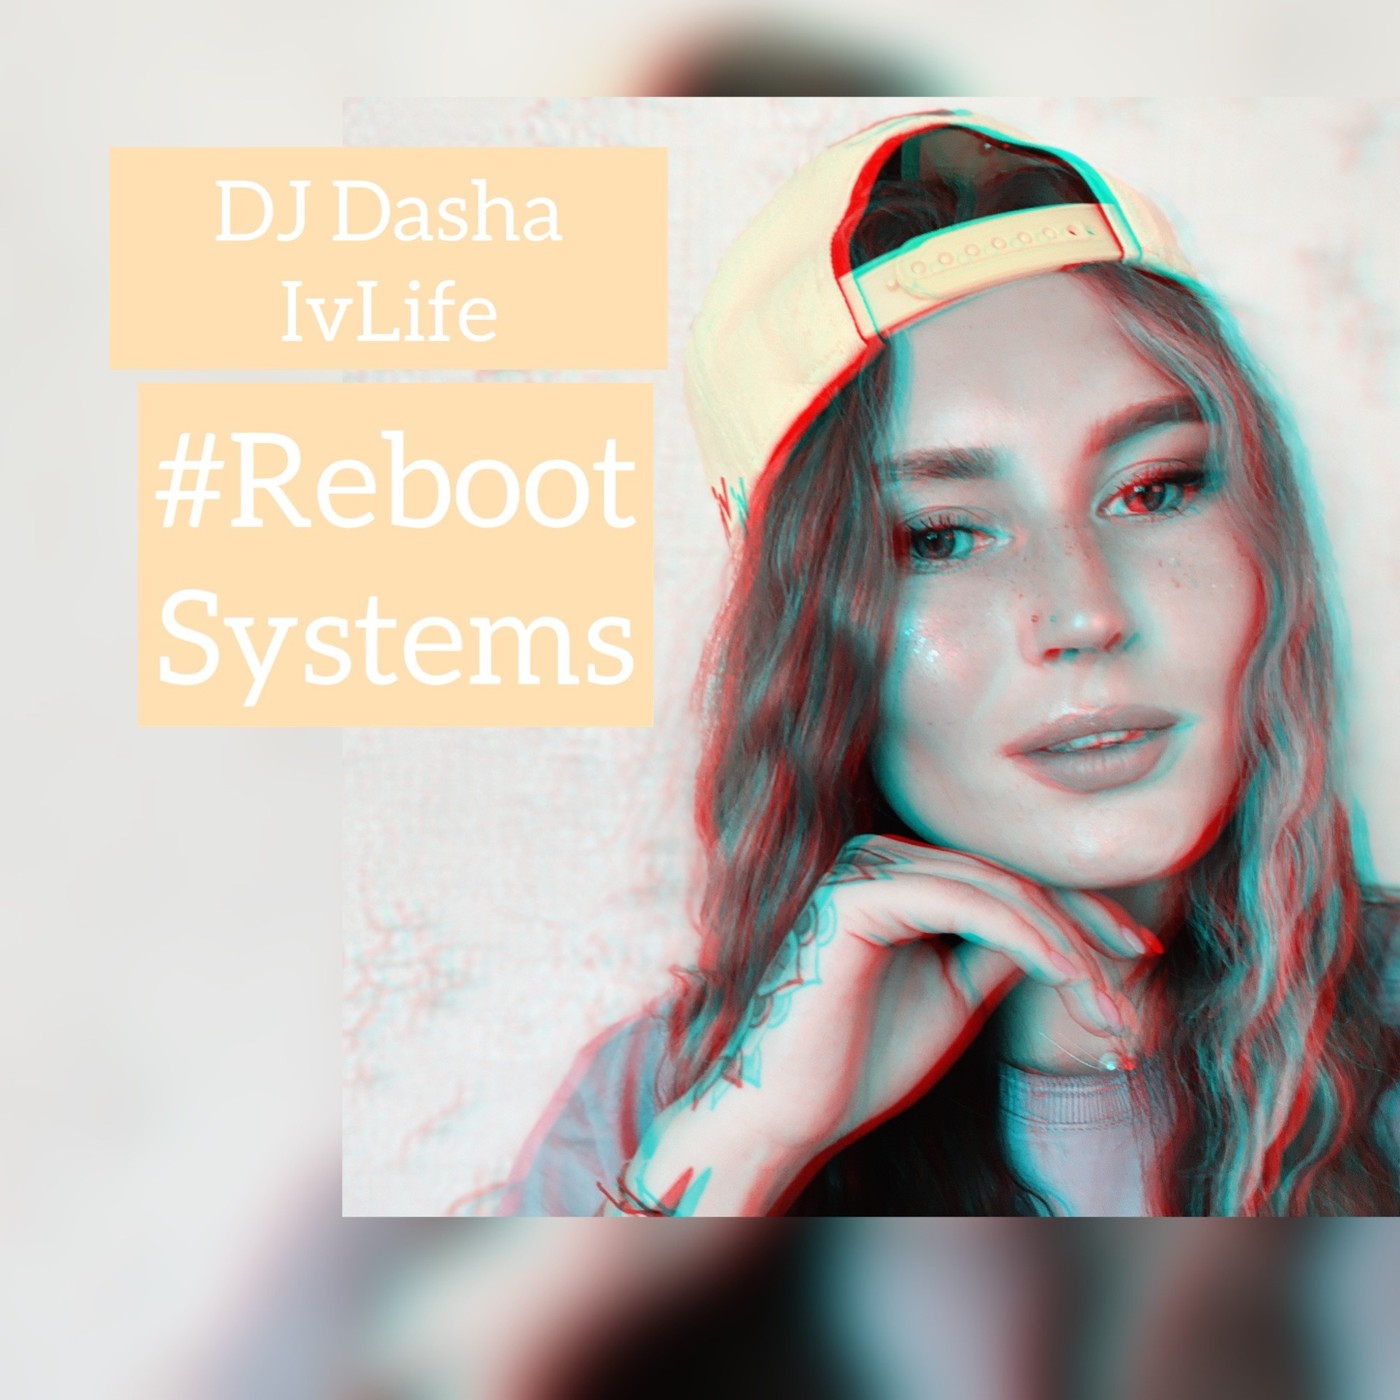 Dj Dasha ivLife-#Reboot Systems #64